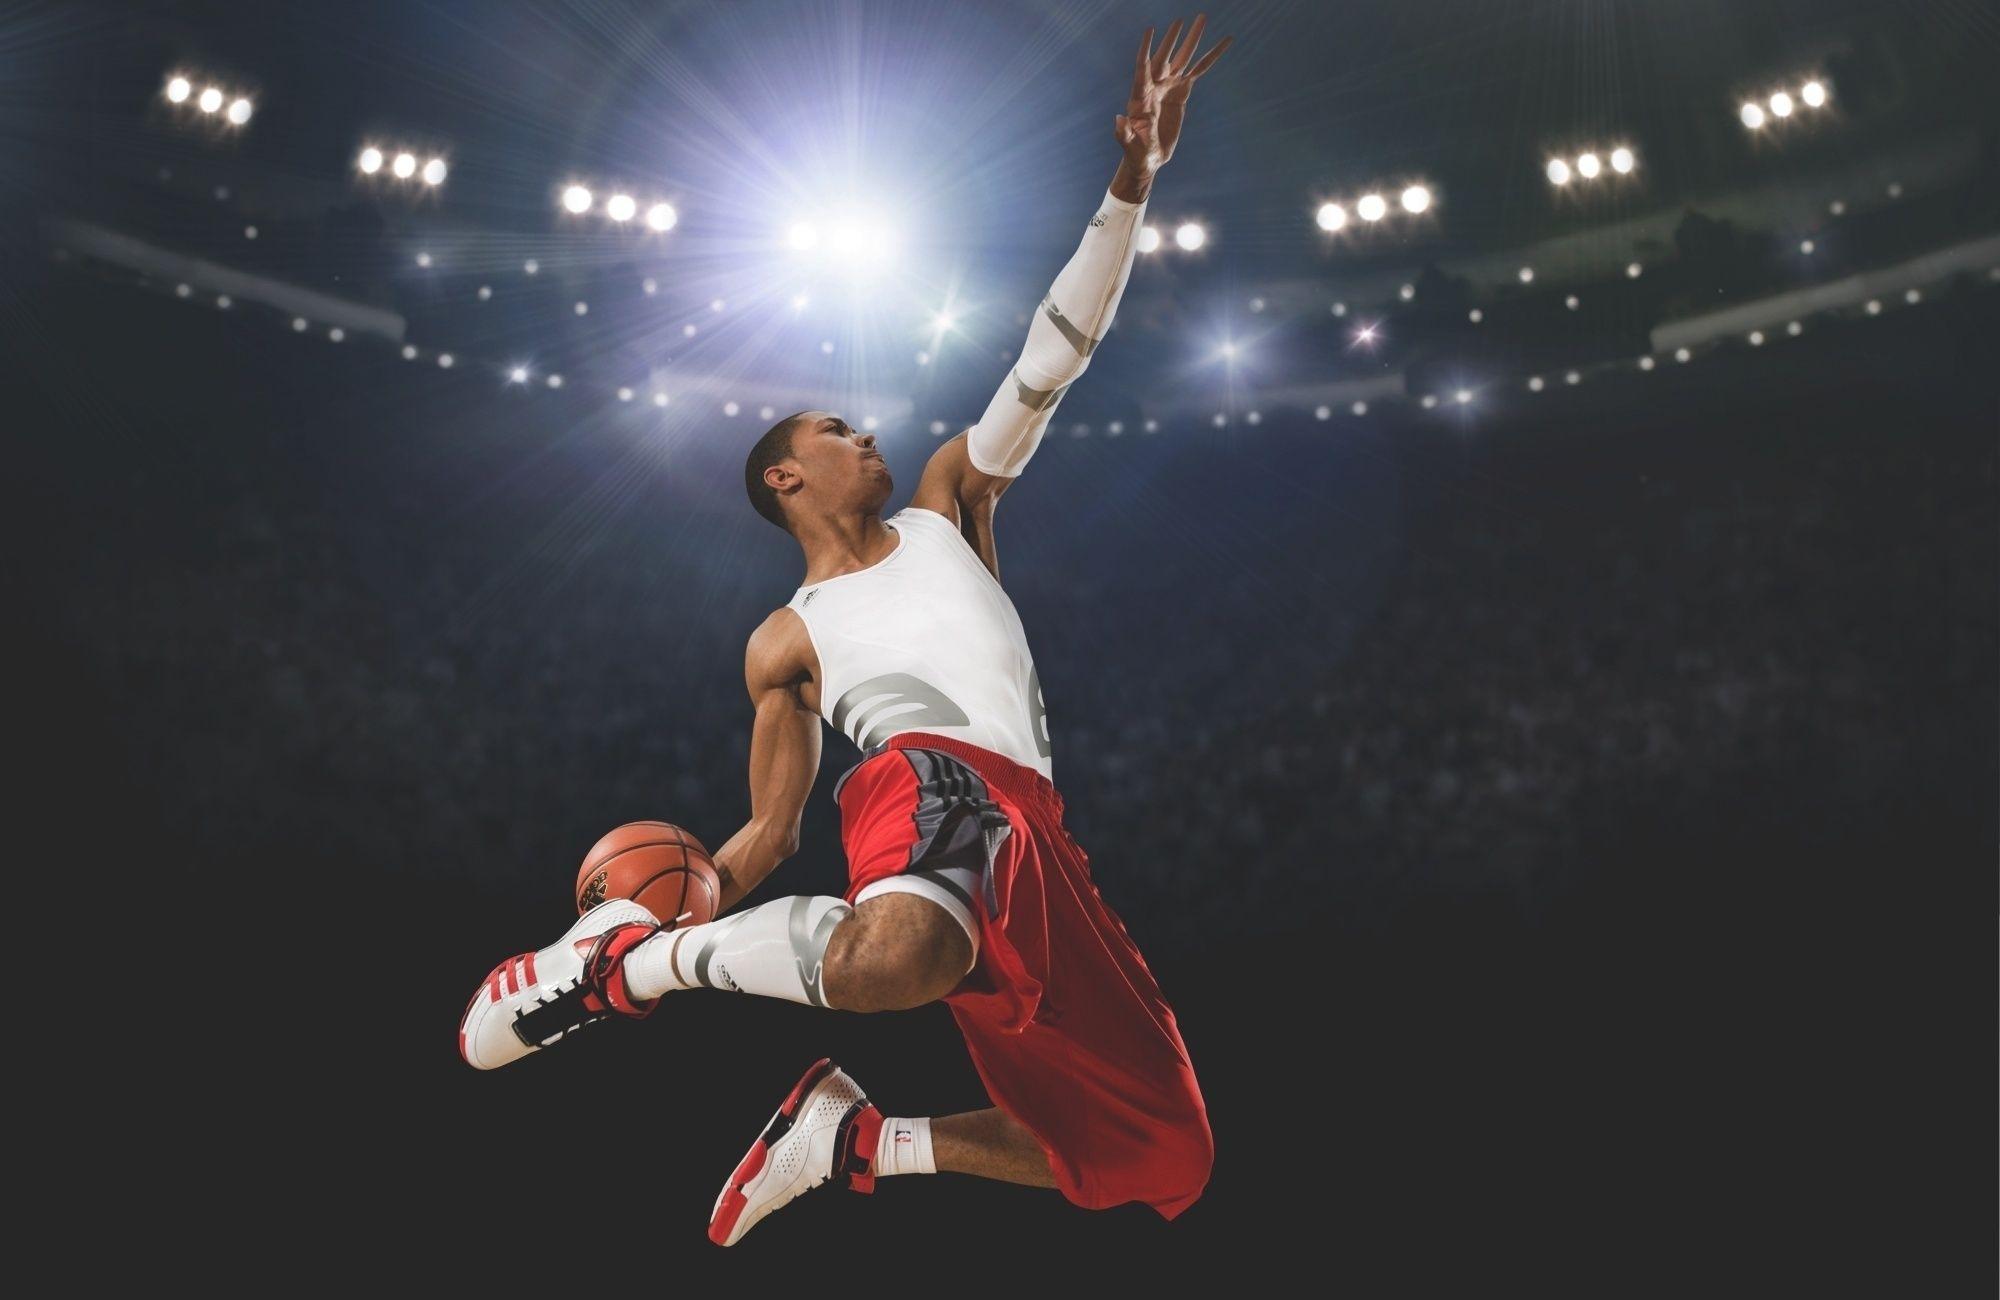 Nike Basketball Full HD Pics Wallpaper 3105 Wallpaper Site